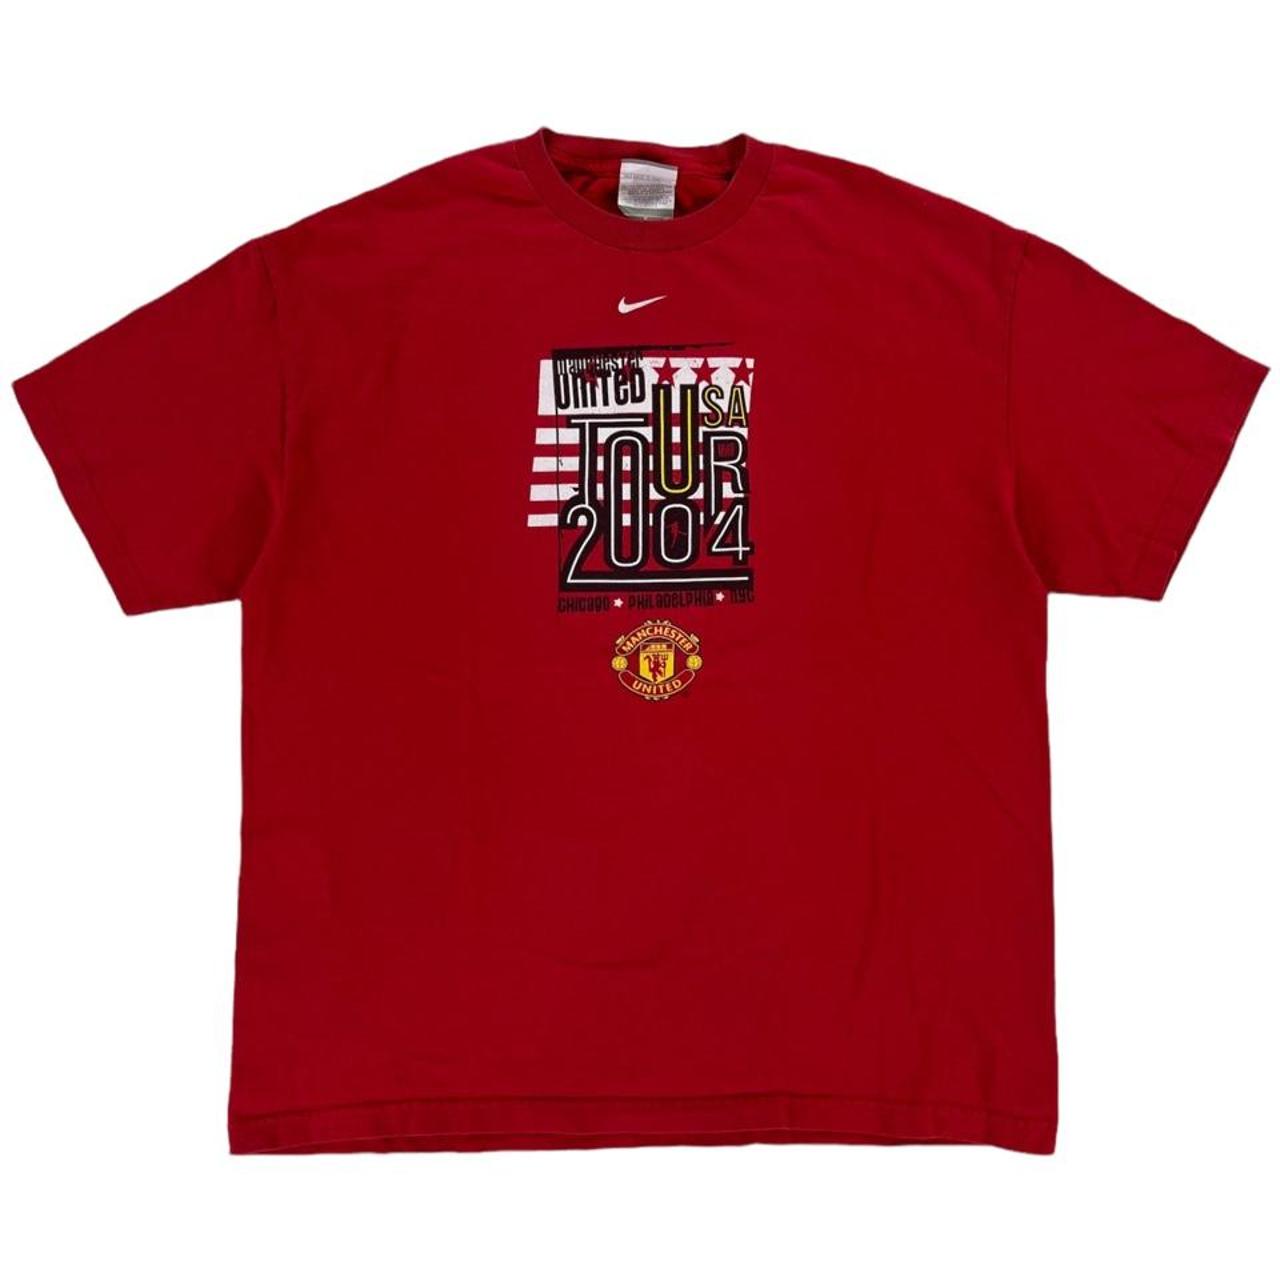 Product Image 1 - Vintage 2004 Manchester United USA